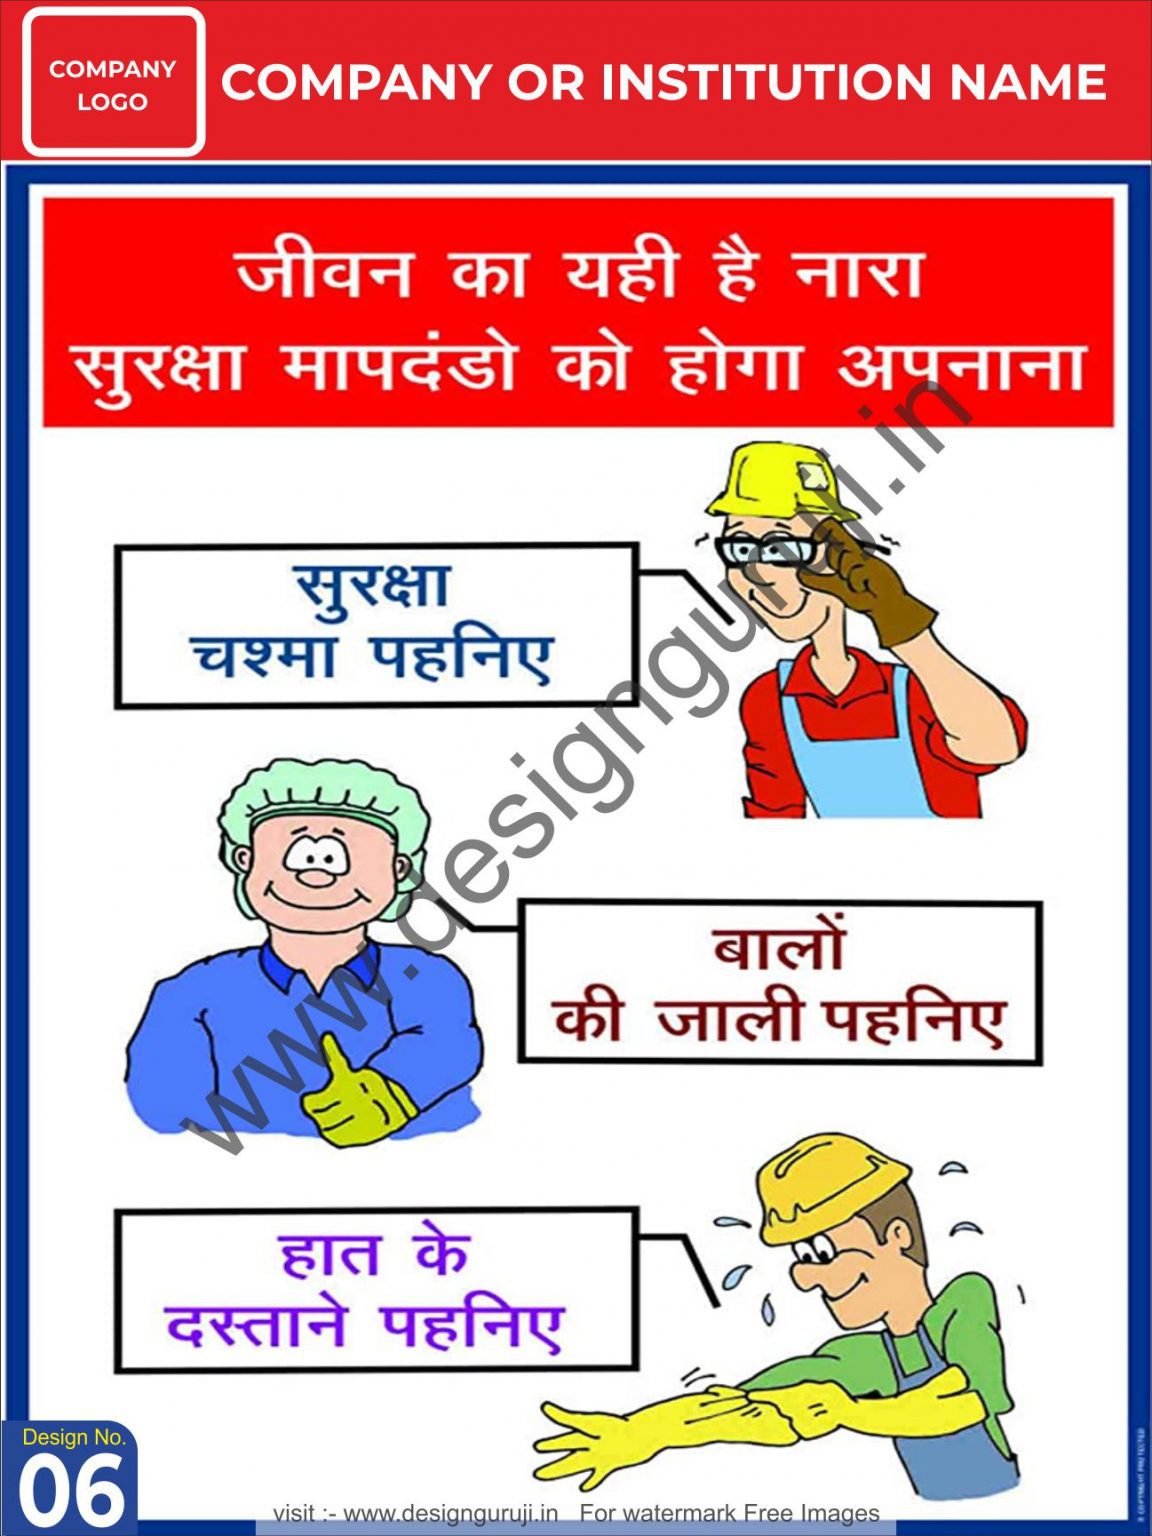 ludo rules in hindi